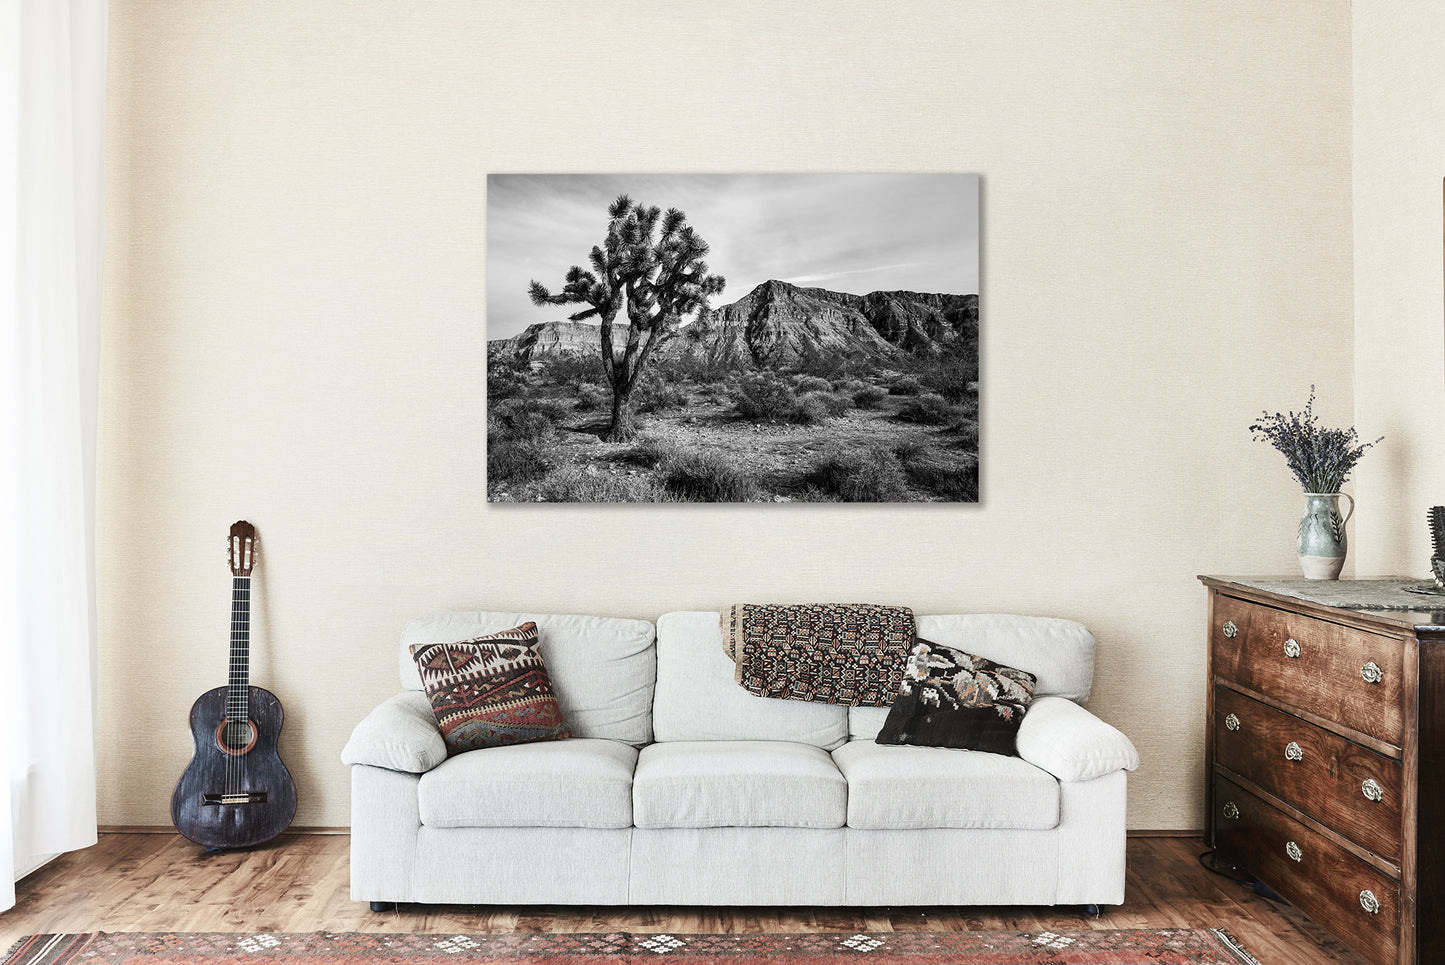 Desert Canvas Wall Art - Black and White Gallery Wrap of Joshua Tree and Mountain in Arizona - Southwest Photography Photo Artwork Decor